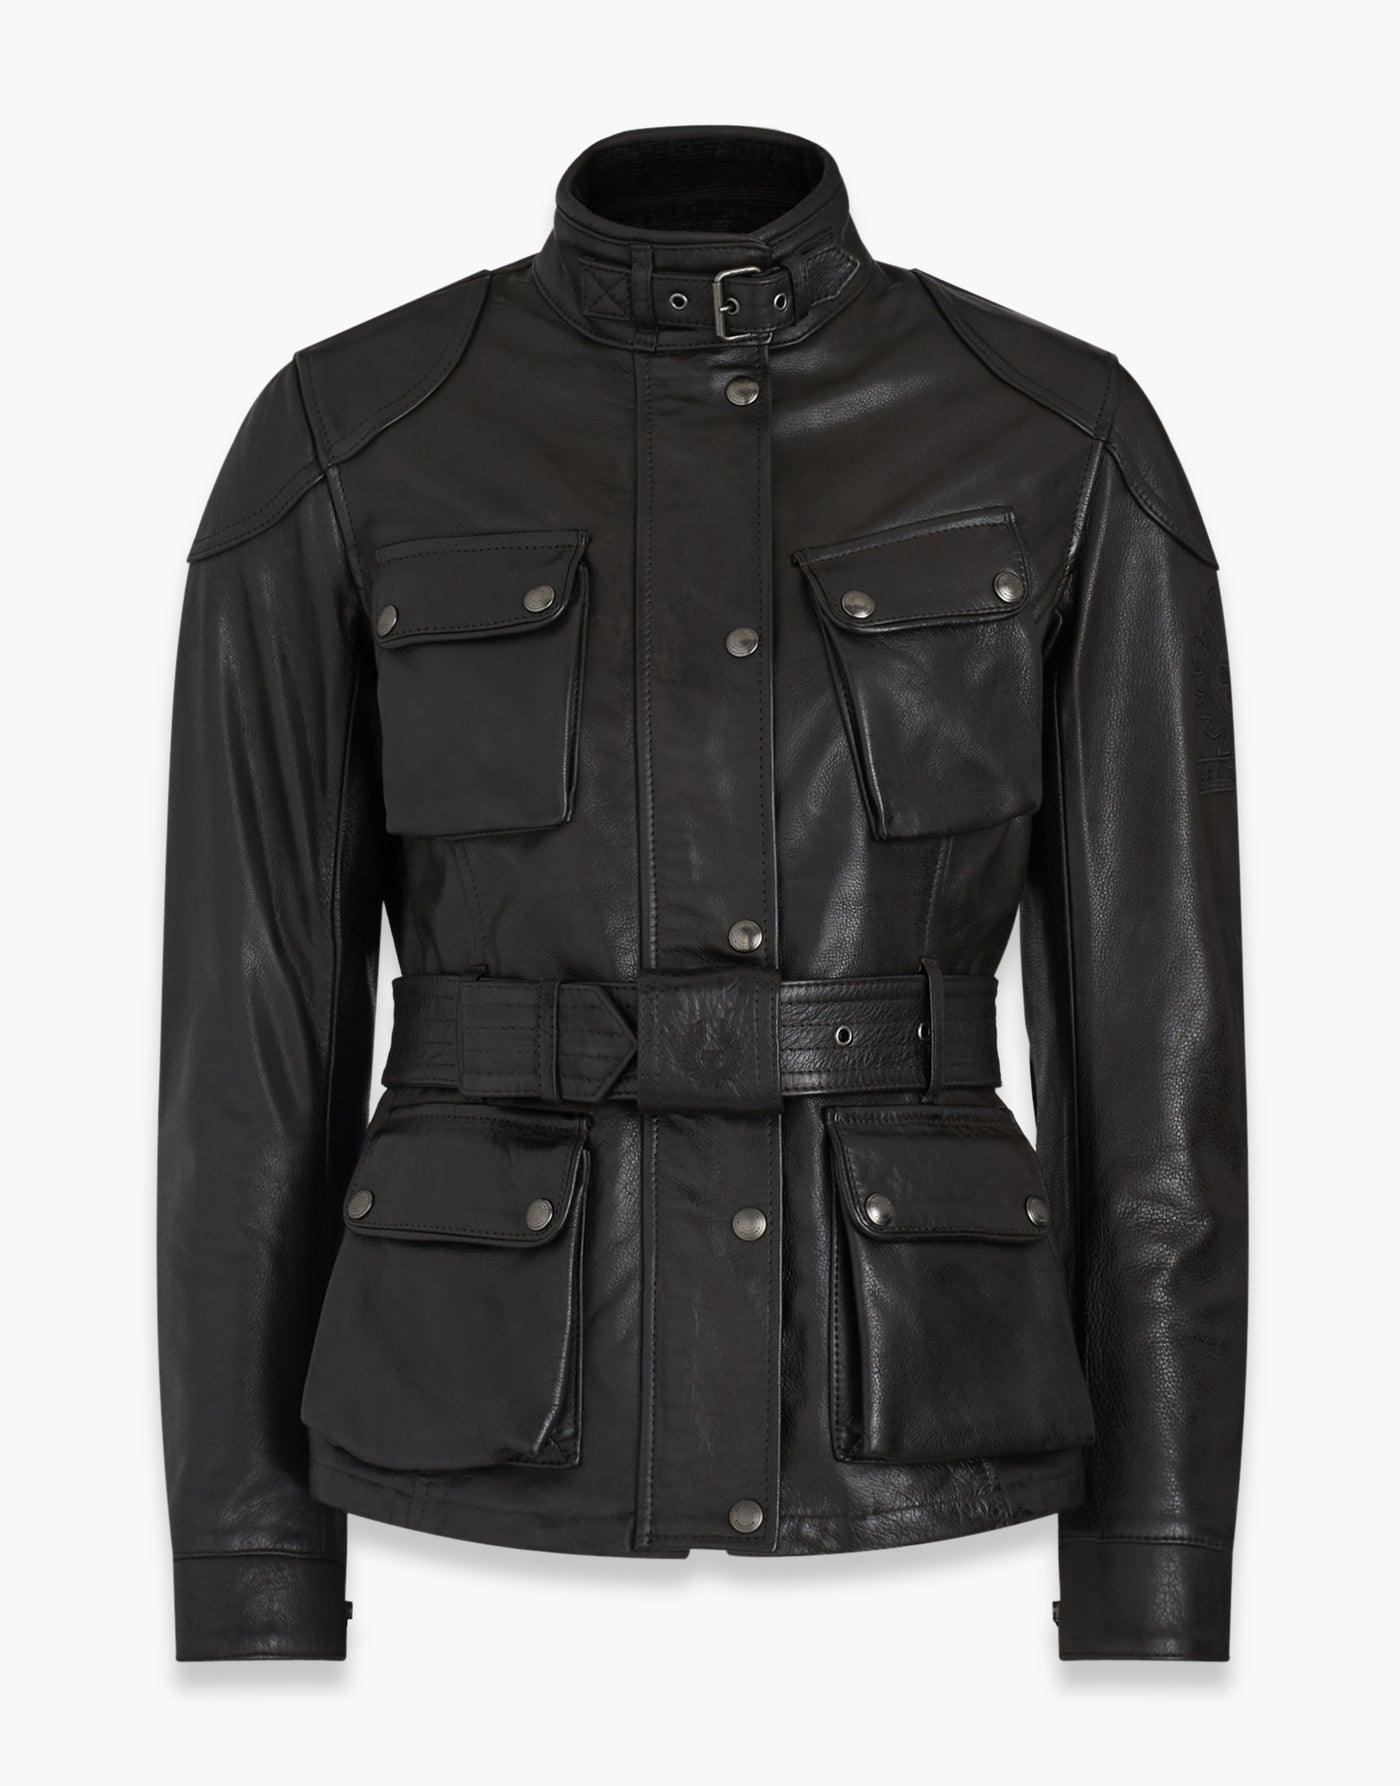 Belstaff Trialmaster Pro Women's Leather Jacket Antique Black